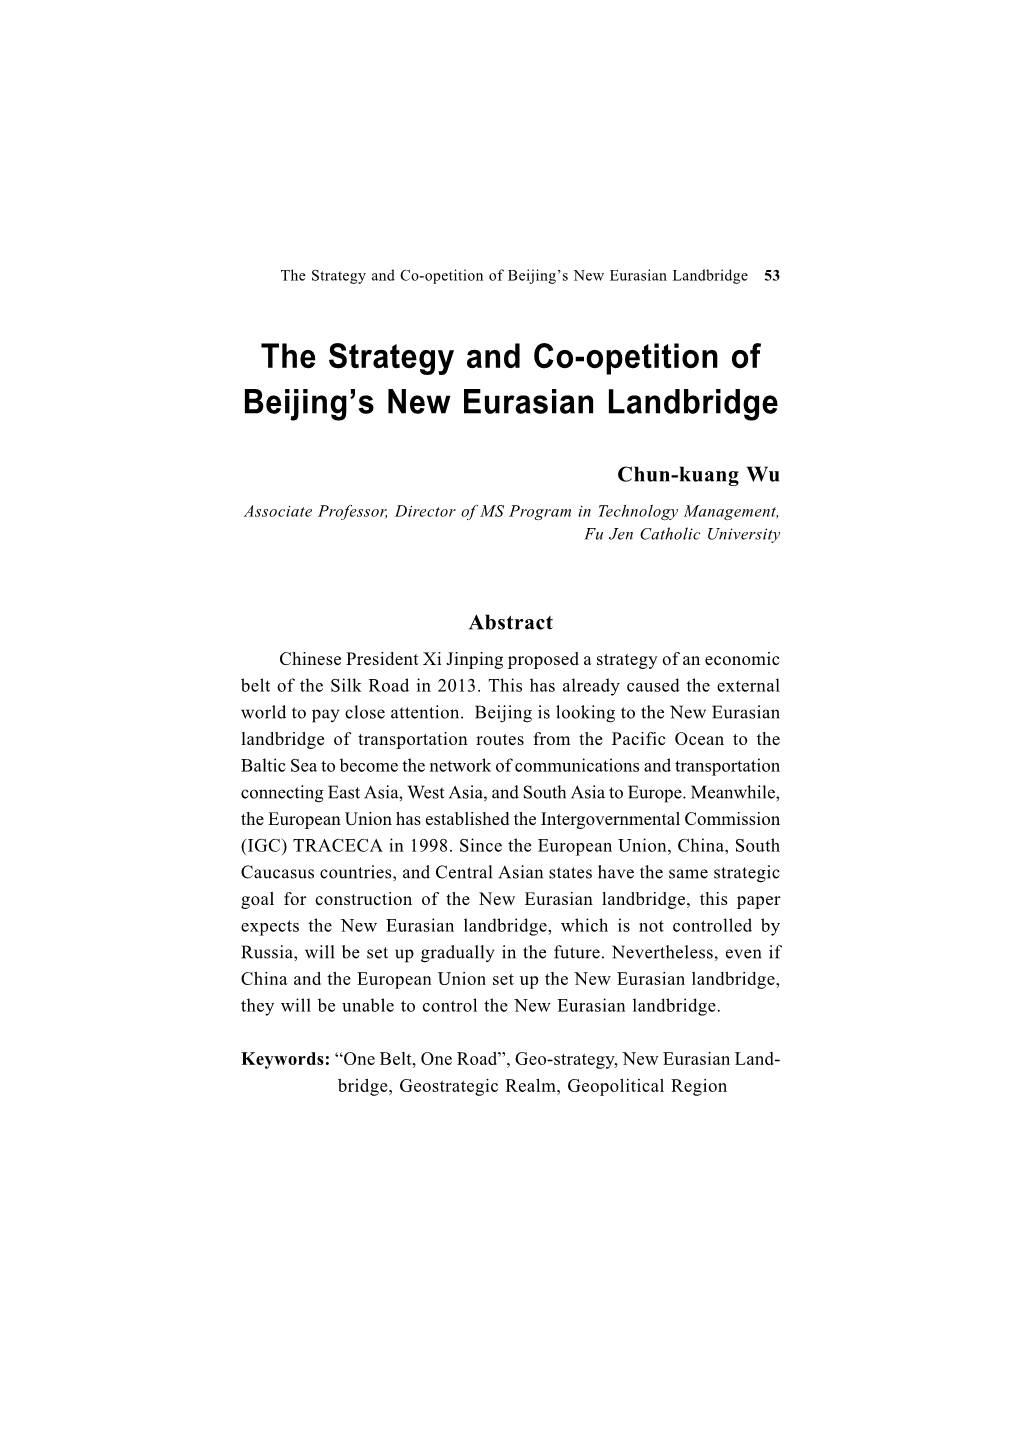 The Strategy and Co-Opetition of Beijing's New Eurasian Landbridge